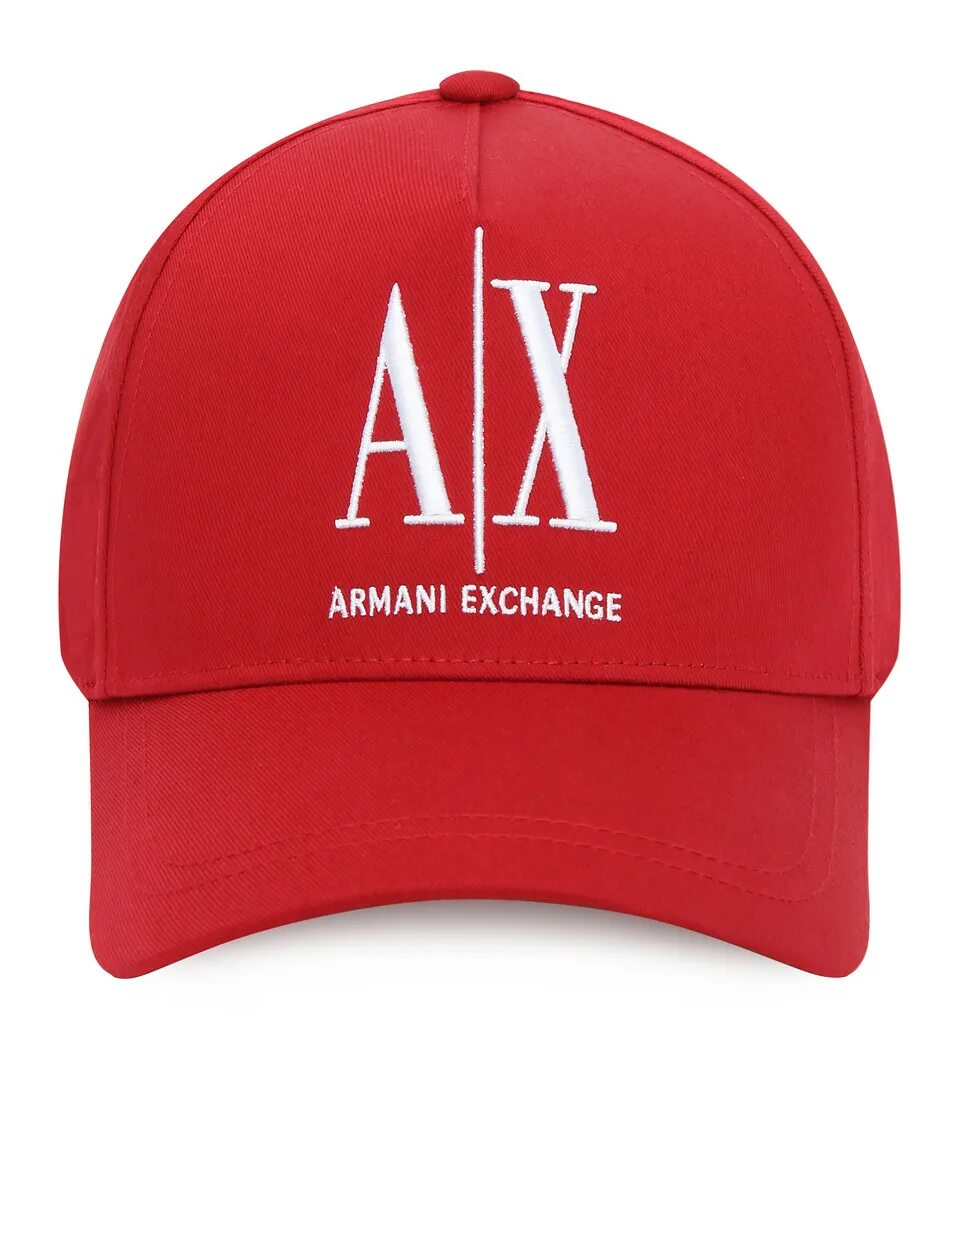 Кепка Armani Exchange 954202. Кепка Armani Exchange белая. Бейсболки Армани эксчендж новая коллекция. Армани эксчендж интернет магазин